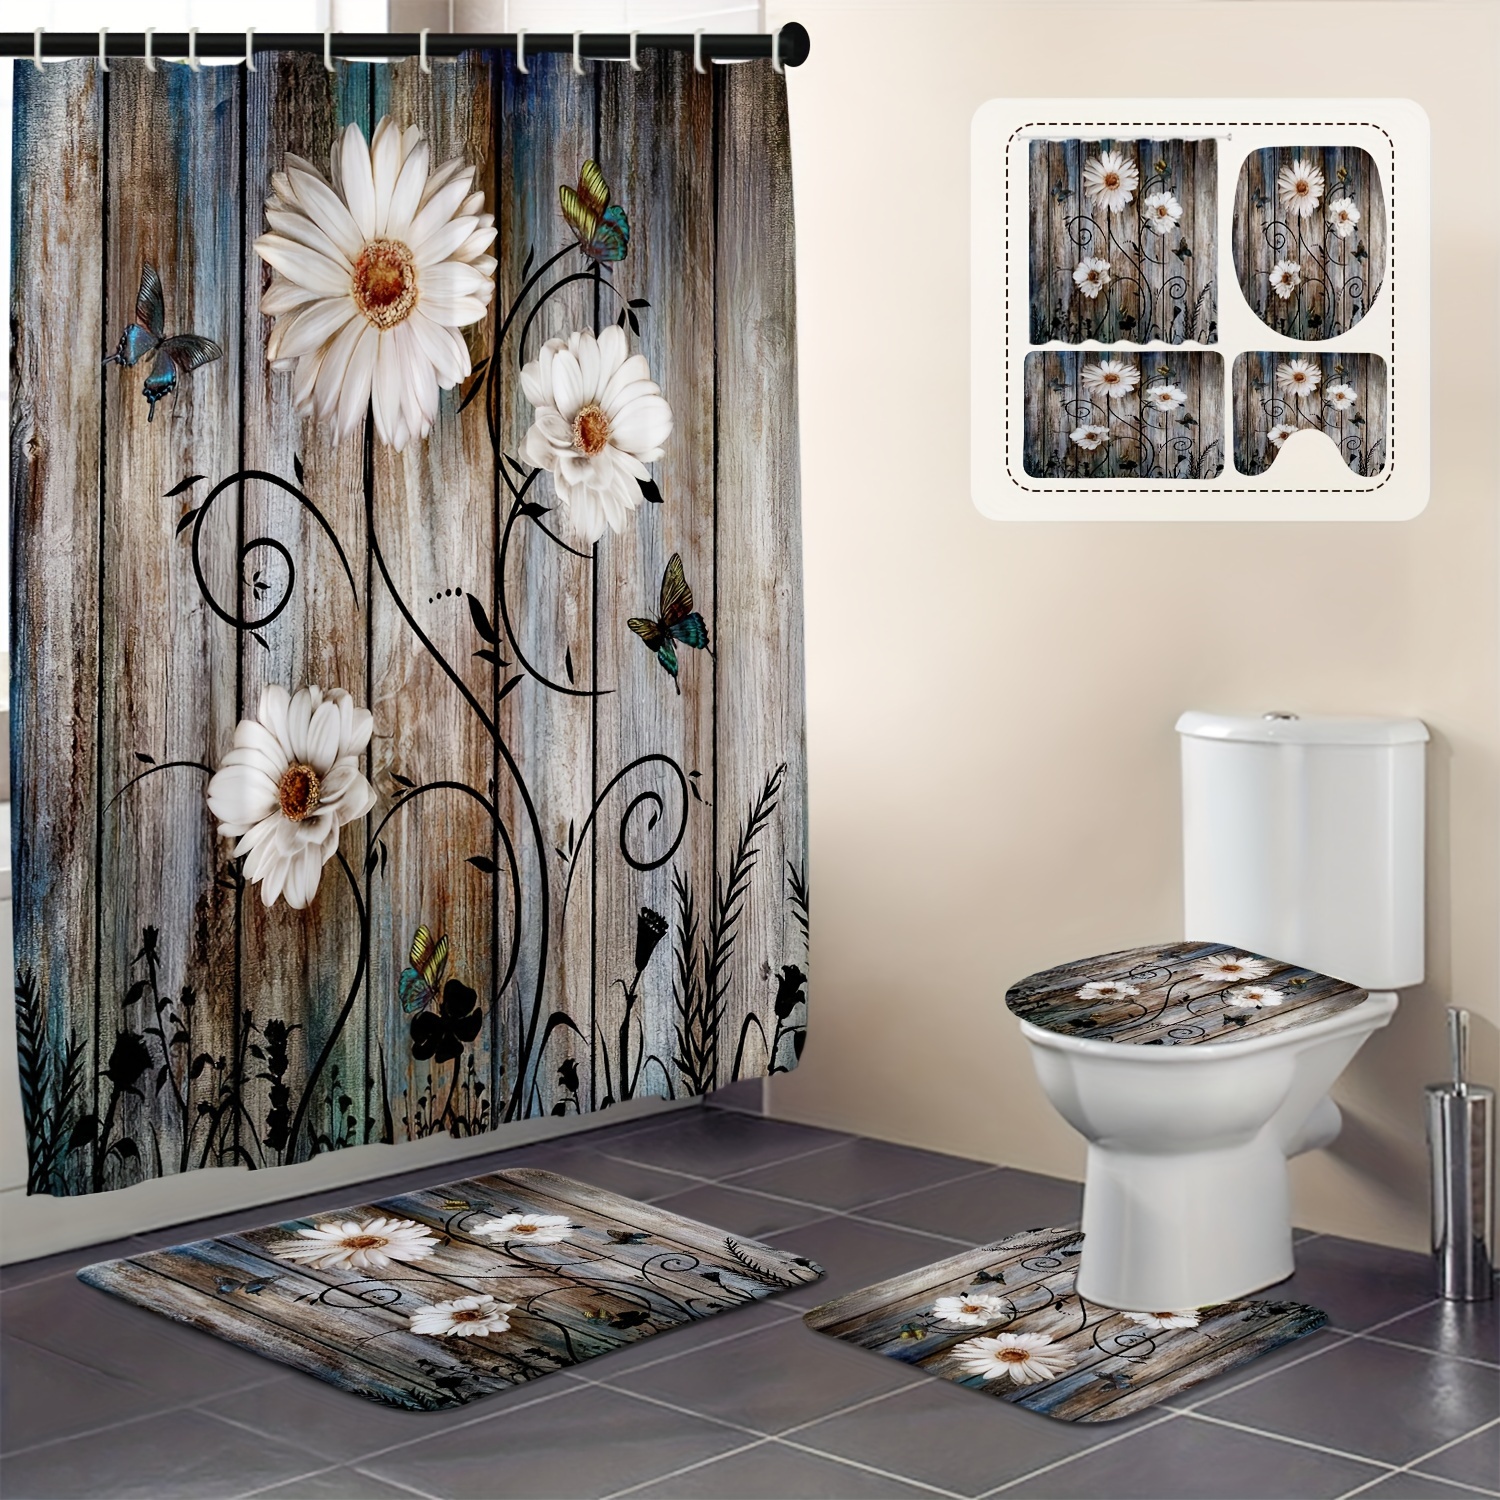 White Daisy Bathroom Decor Black Background Shower Curtain Sets w